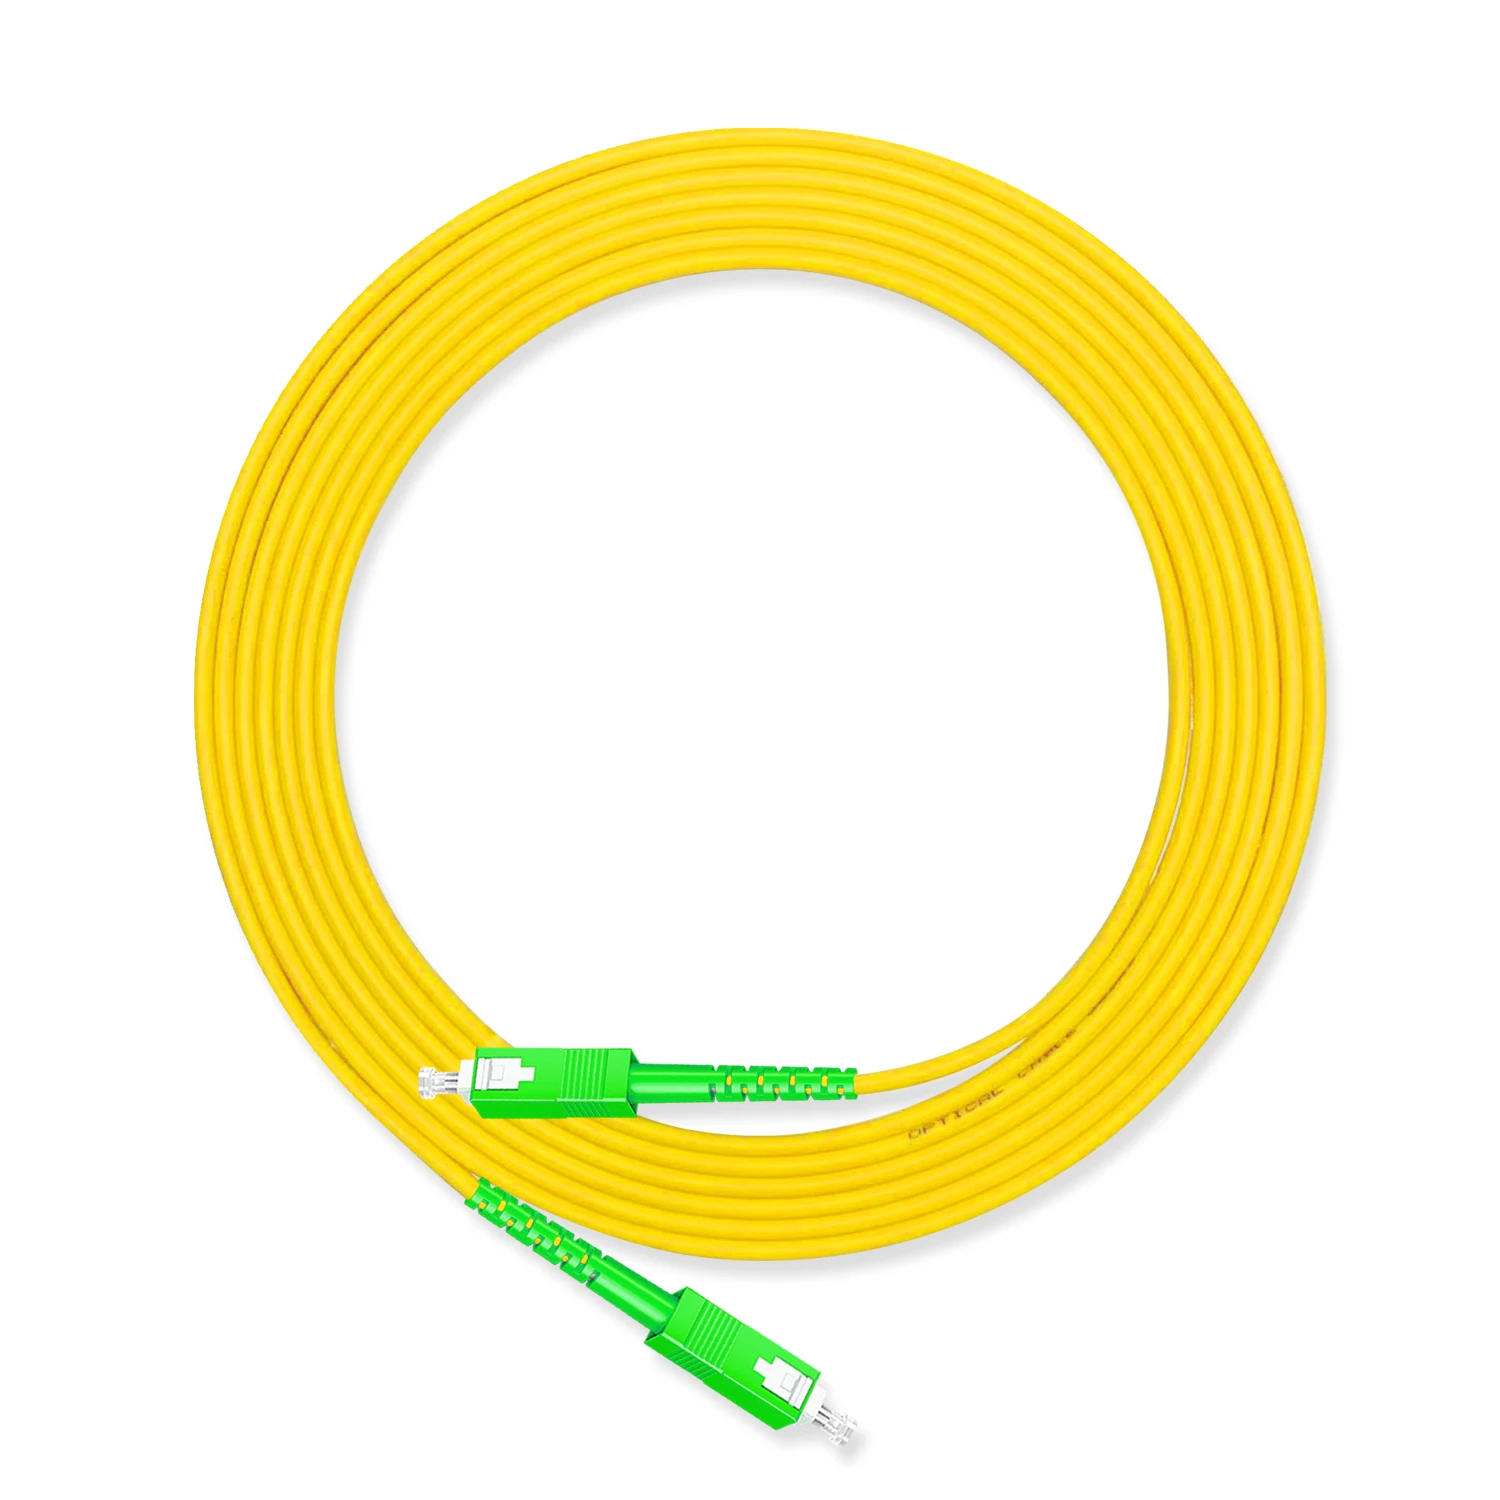 Sc apc Glasfaser-Patch-Überbrückung kabel 3,0mm os2-Kabel Single mode Simplex 1m 3m 5m PVC g652d sm 1310/1550nm ftth